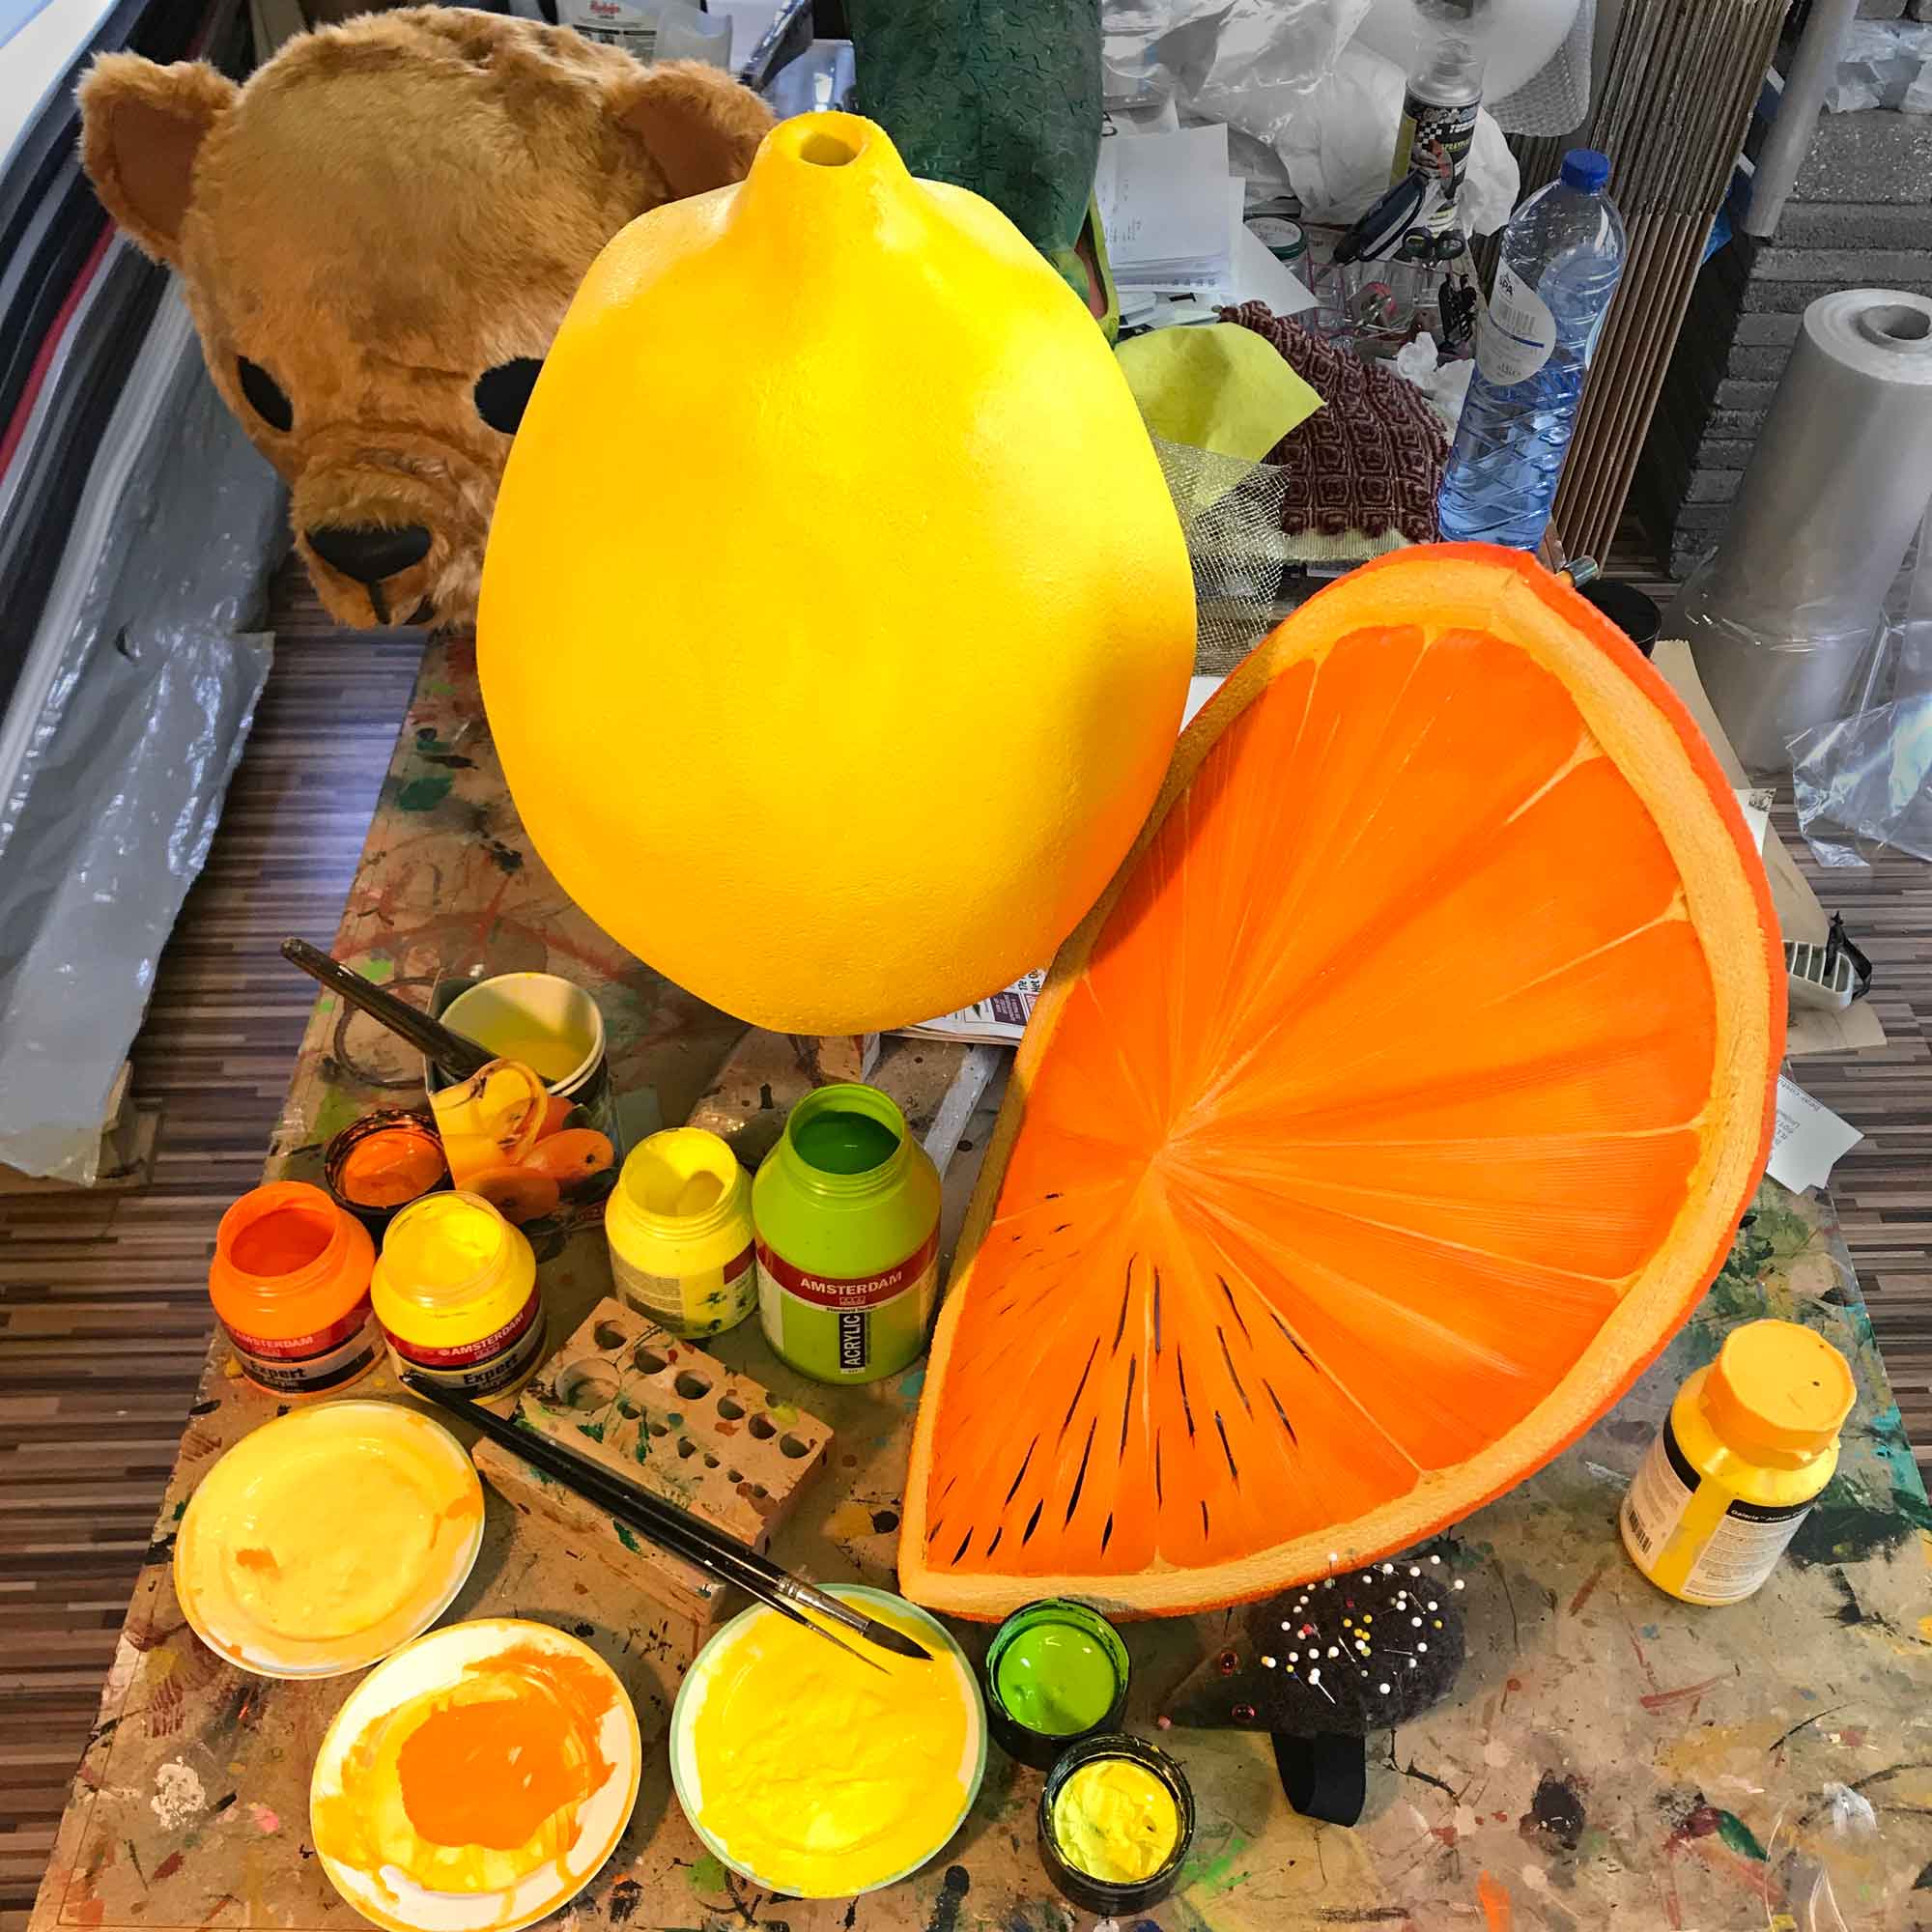 lemon orange fruit custom made head masks maker Tentacle Studio Brouwerij 't Ij